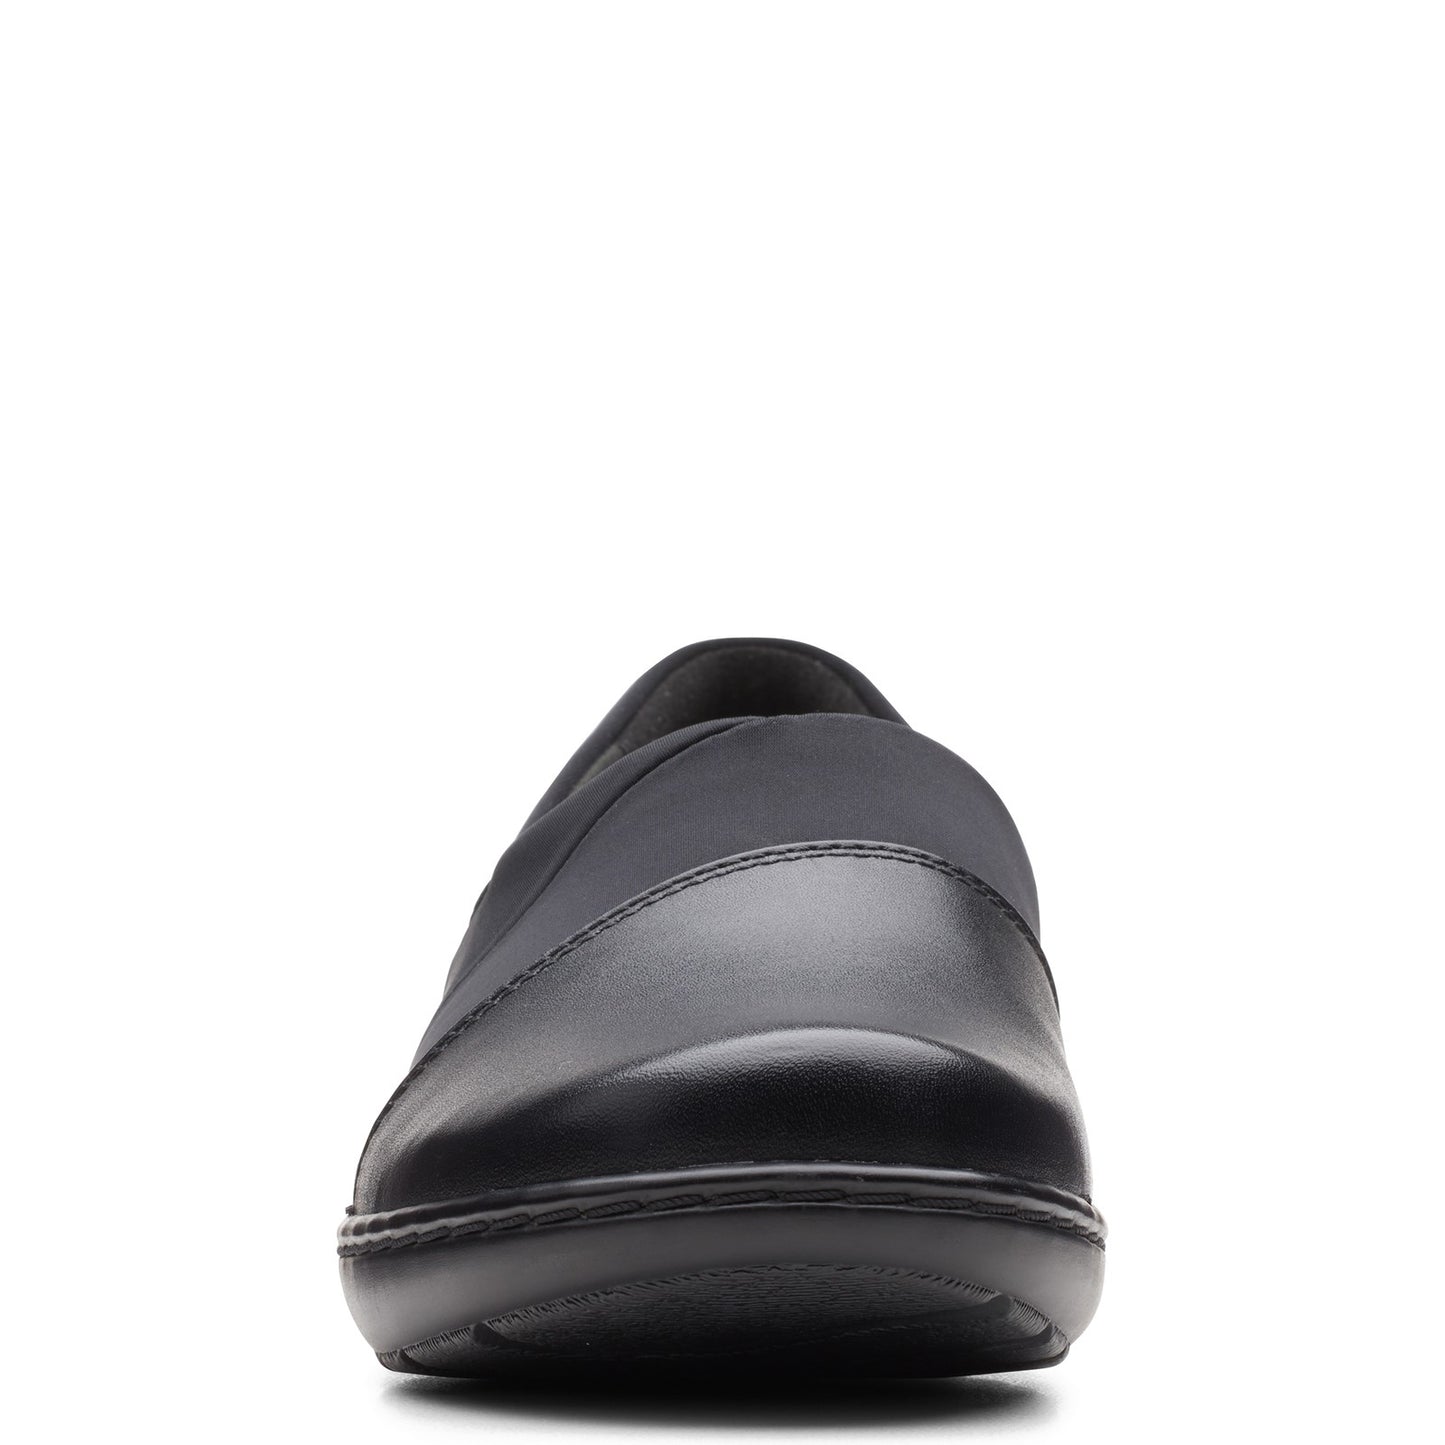 Peltz Shoes  Women's Clarks Cora Heather Slip-On BLACK MIX 26163212